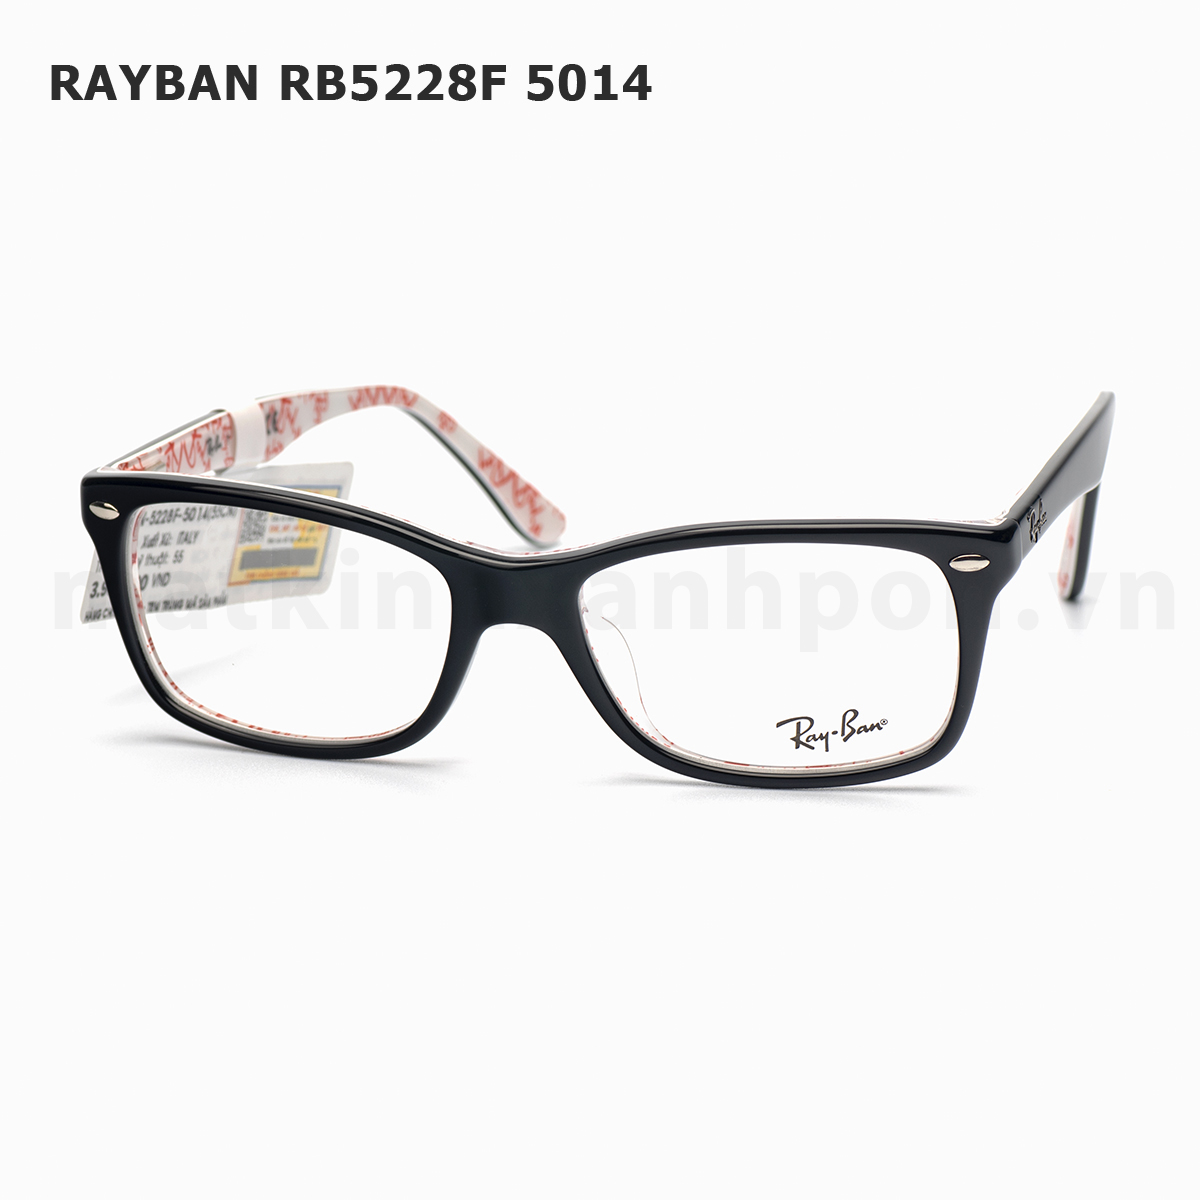 Rayban RB5228F 5014